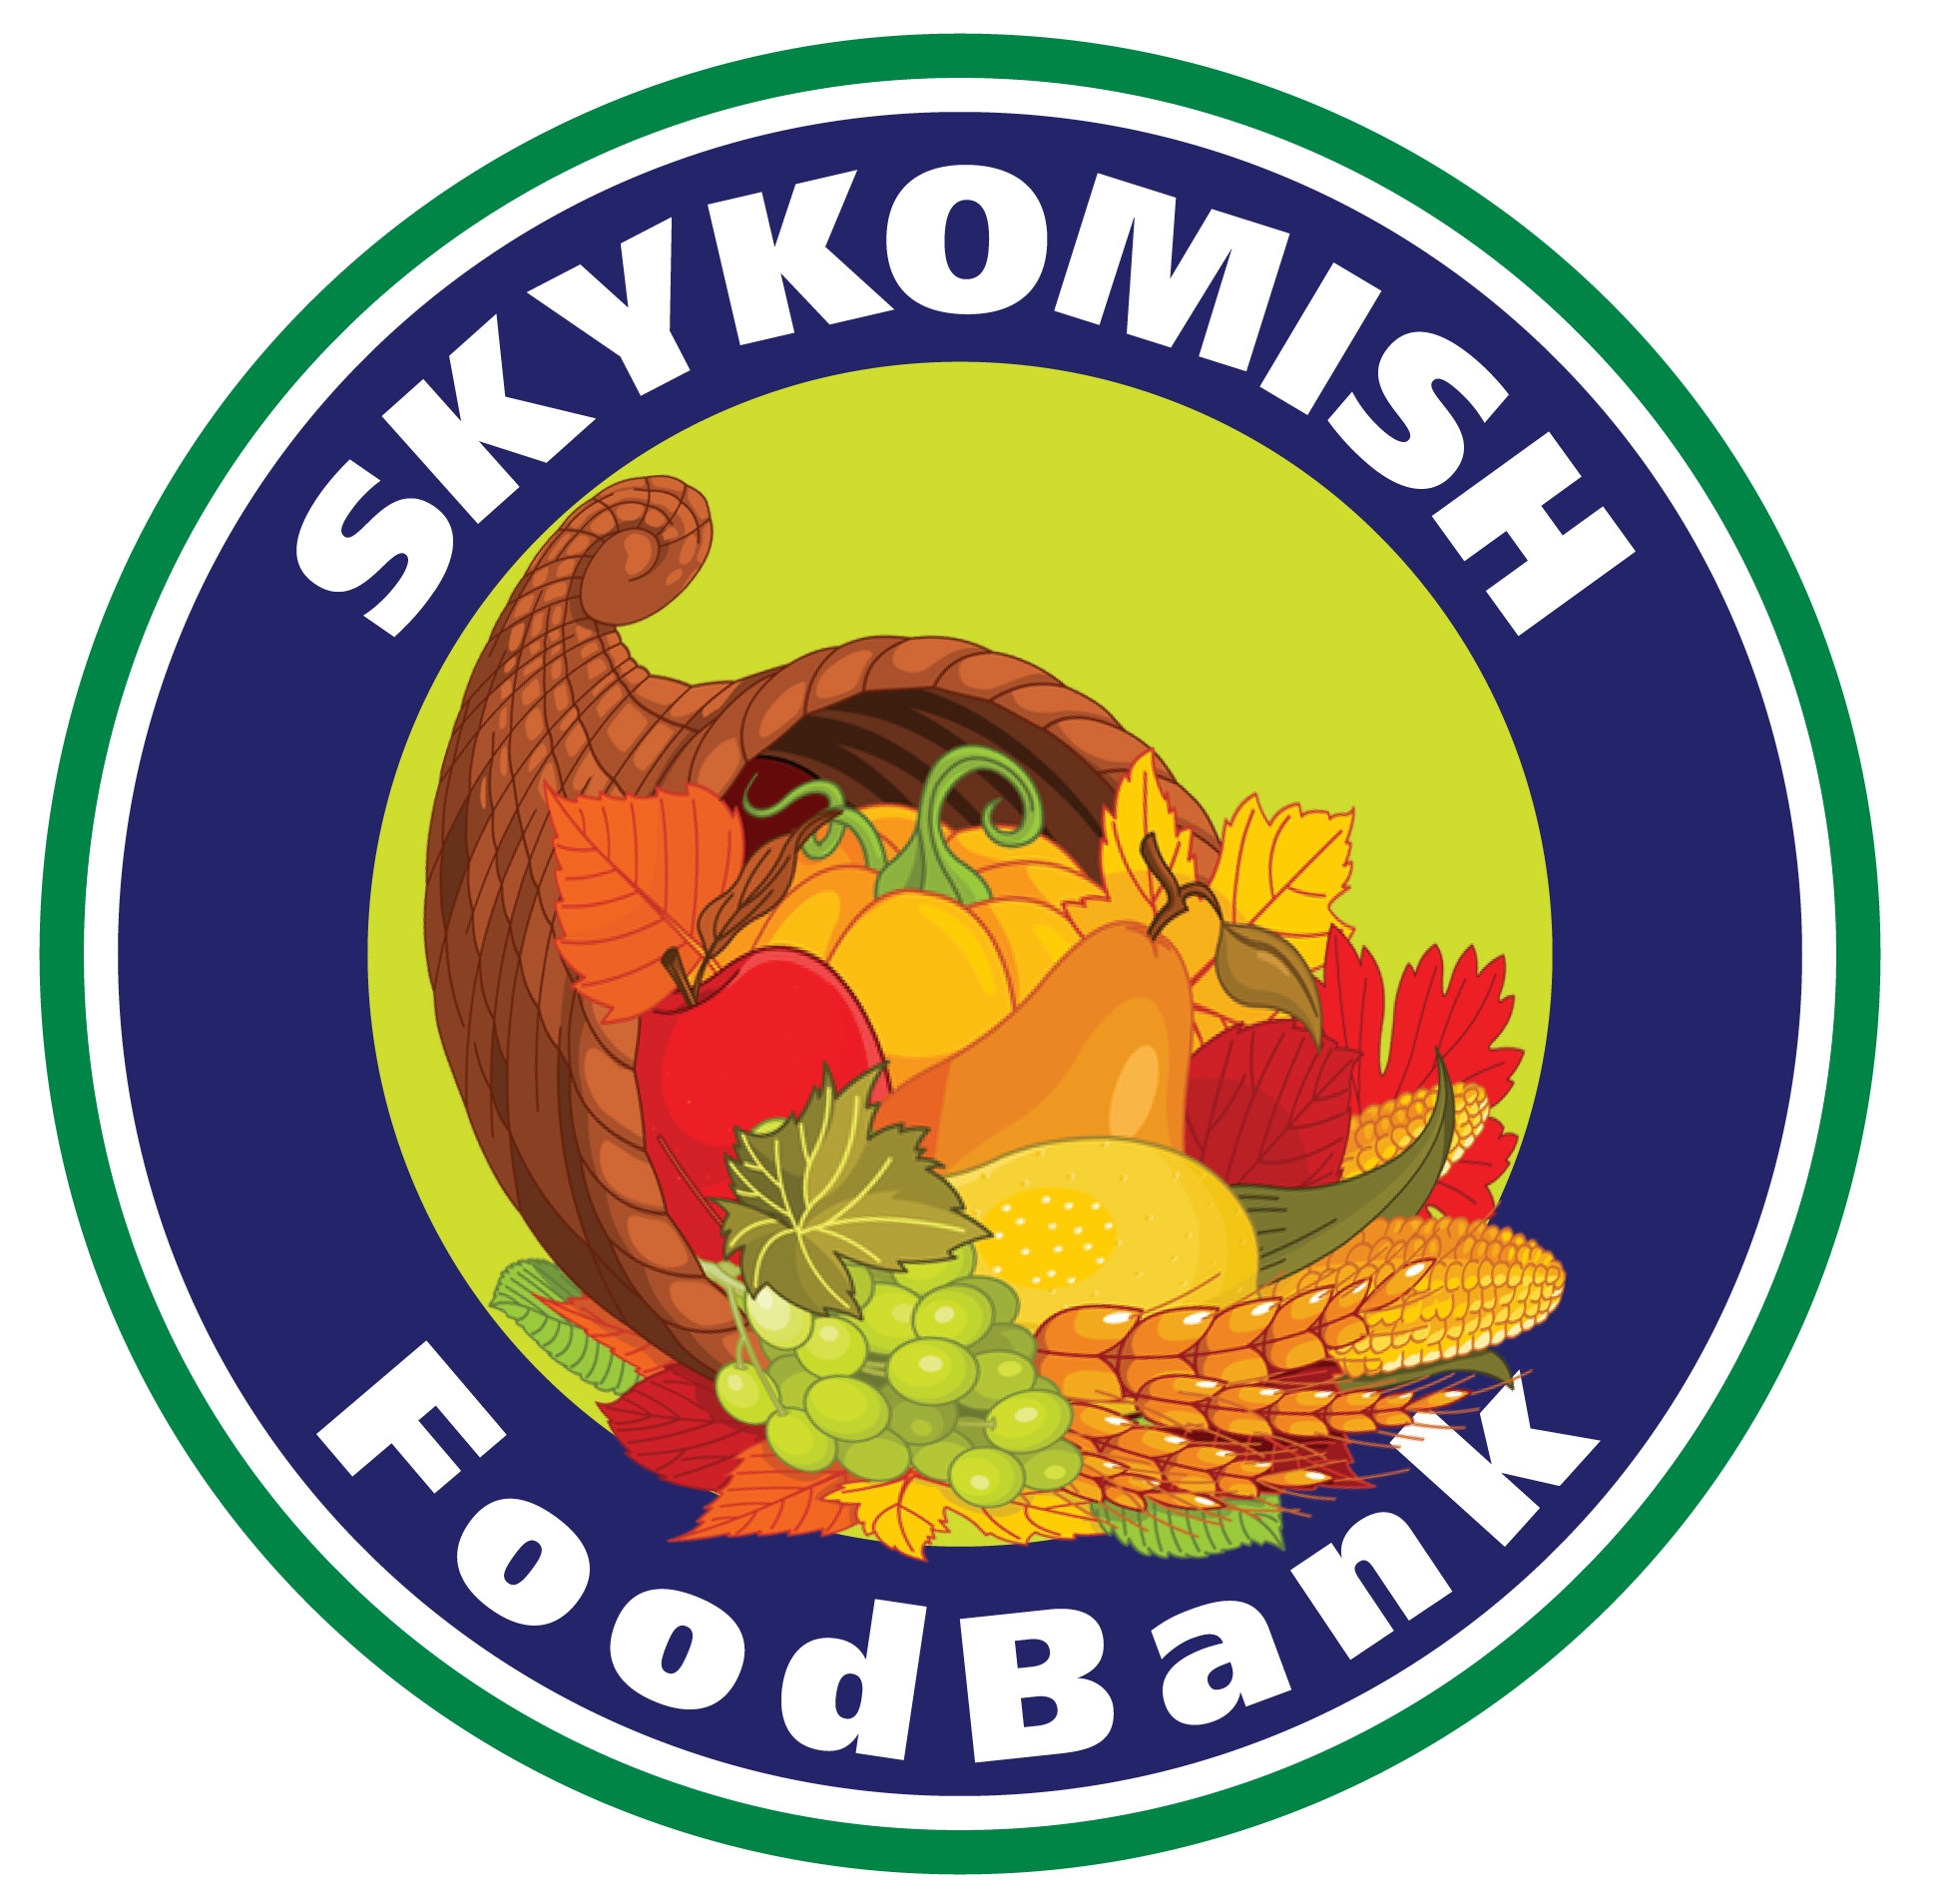 Skykomish Food Bank